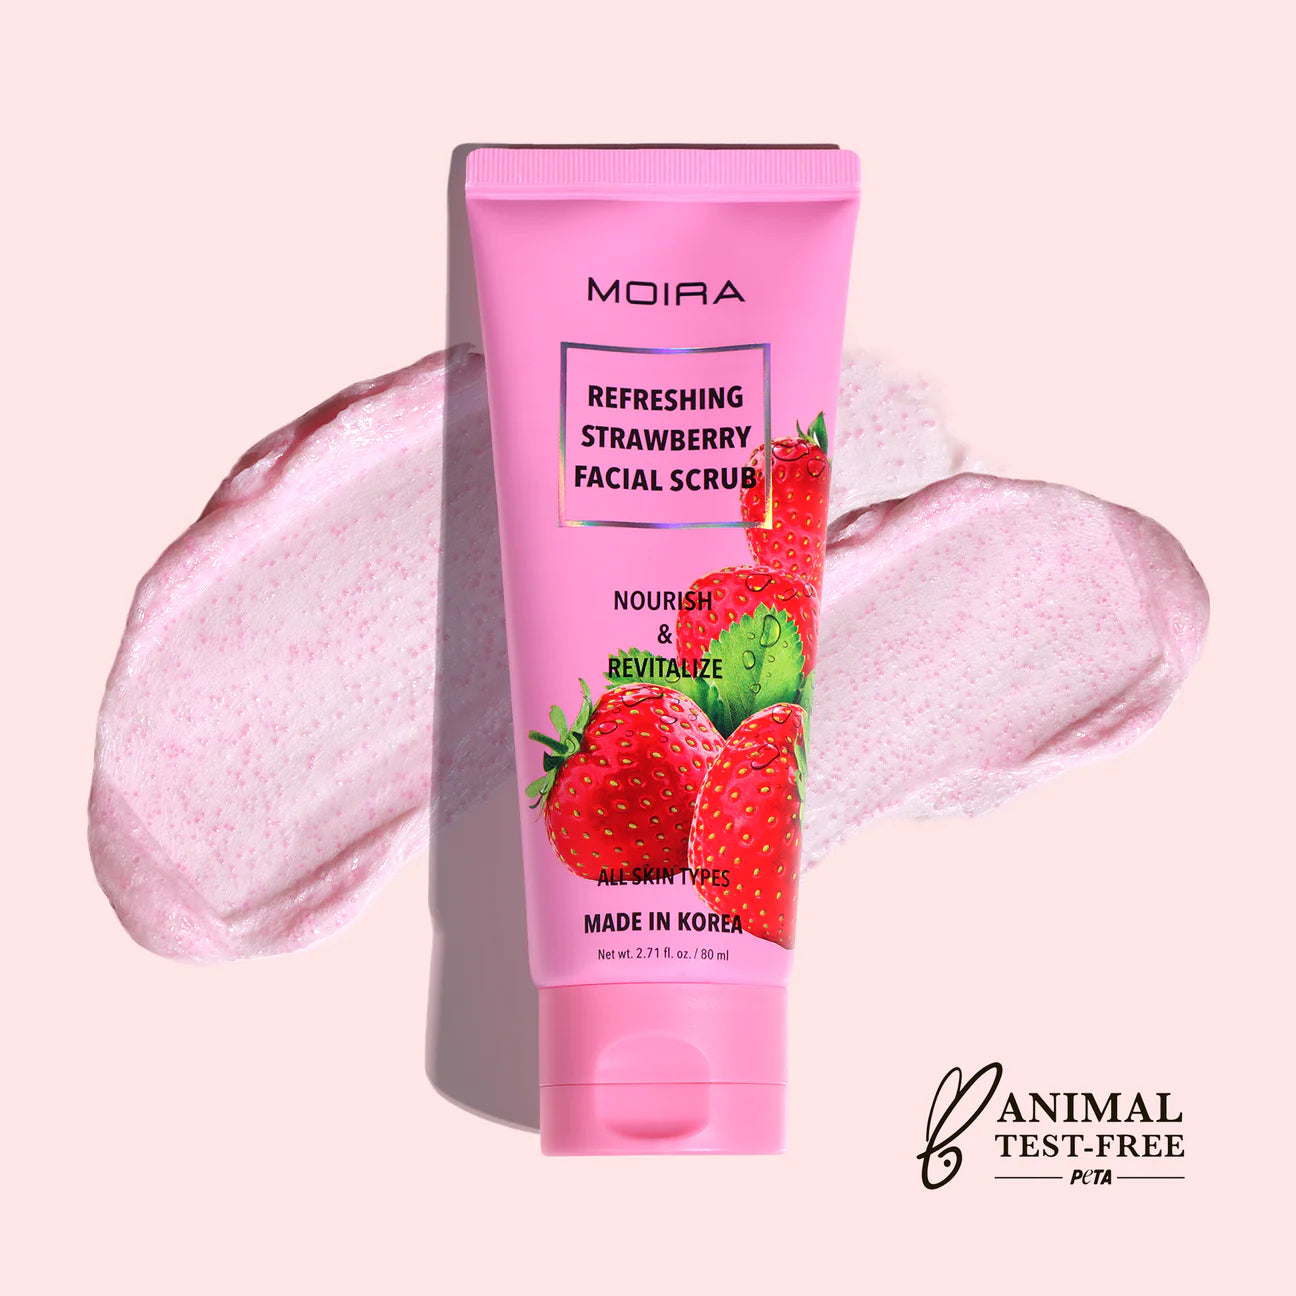 MOIRA Refreshing Strawberry Facial Scrub